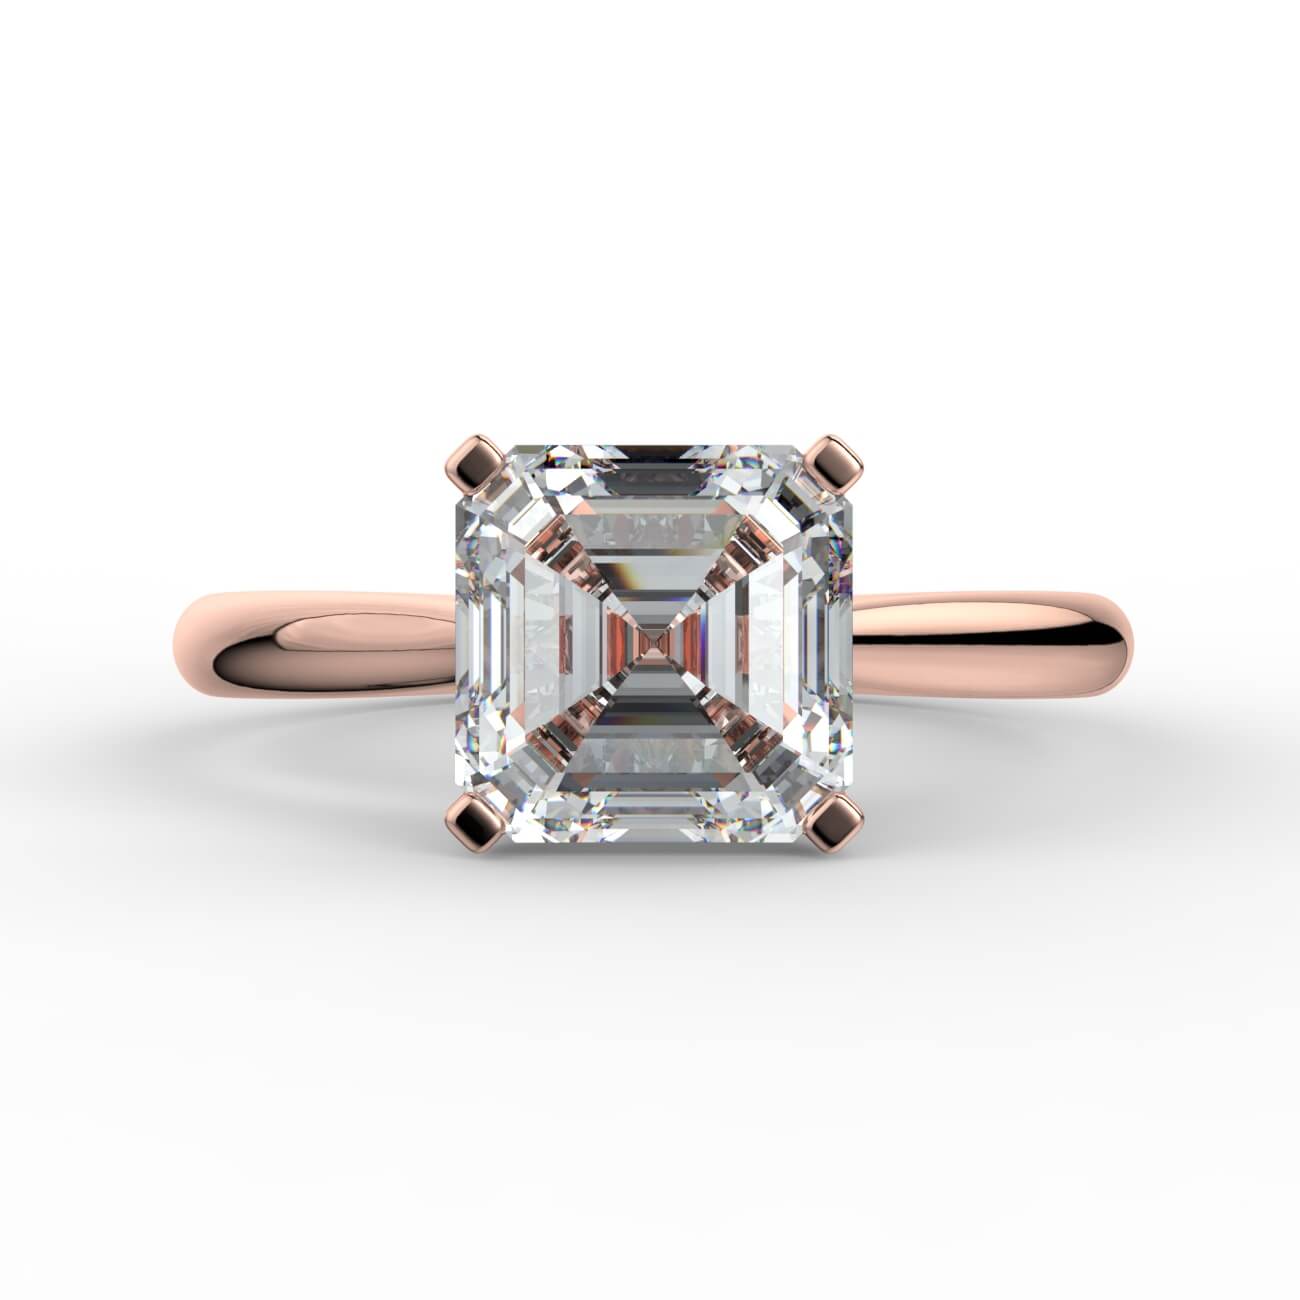 Asscher cut diamond cathedral engagement ring in rose gold – Australian Diamond Network